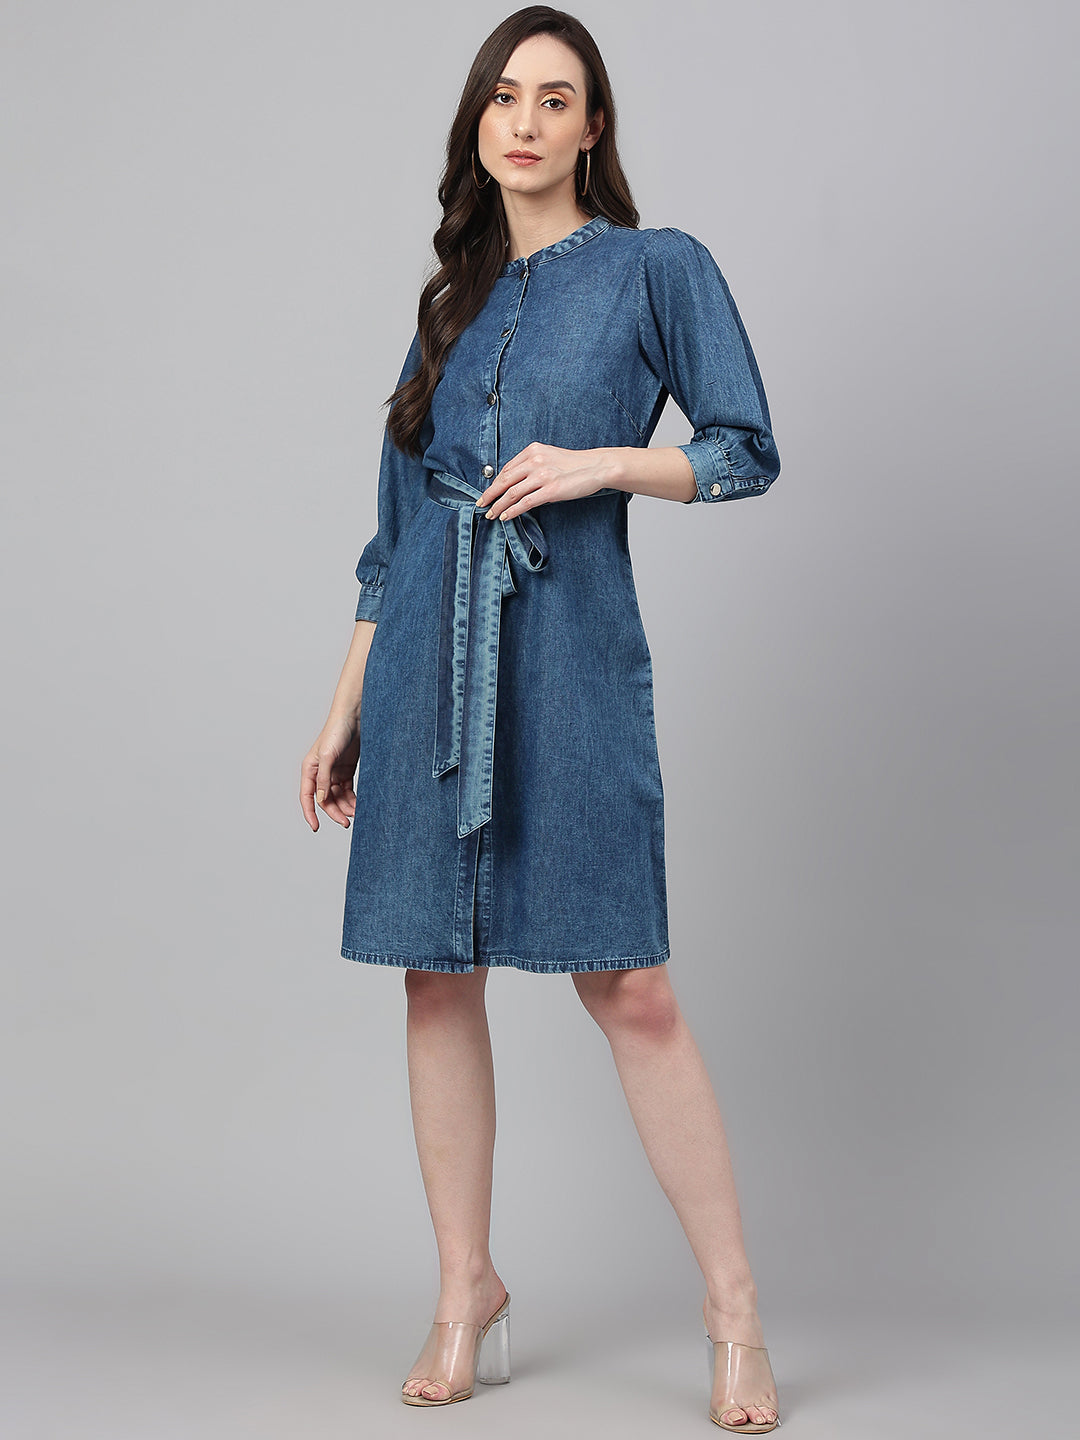 Women's Solid Blue Denim Dress - Janasya